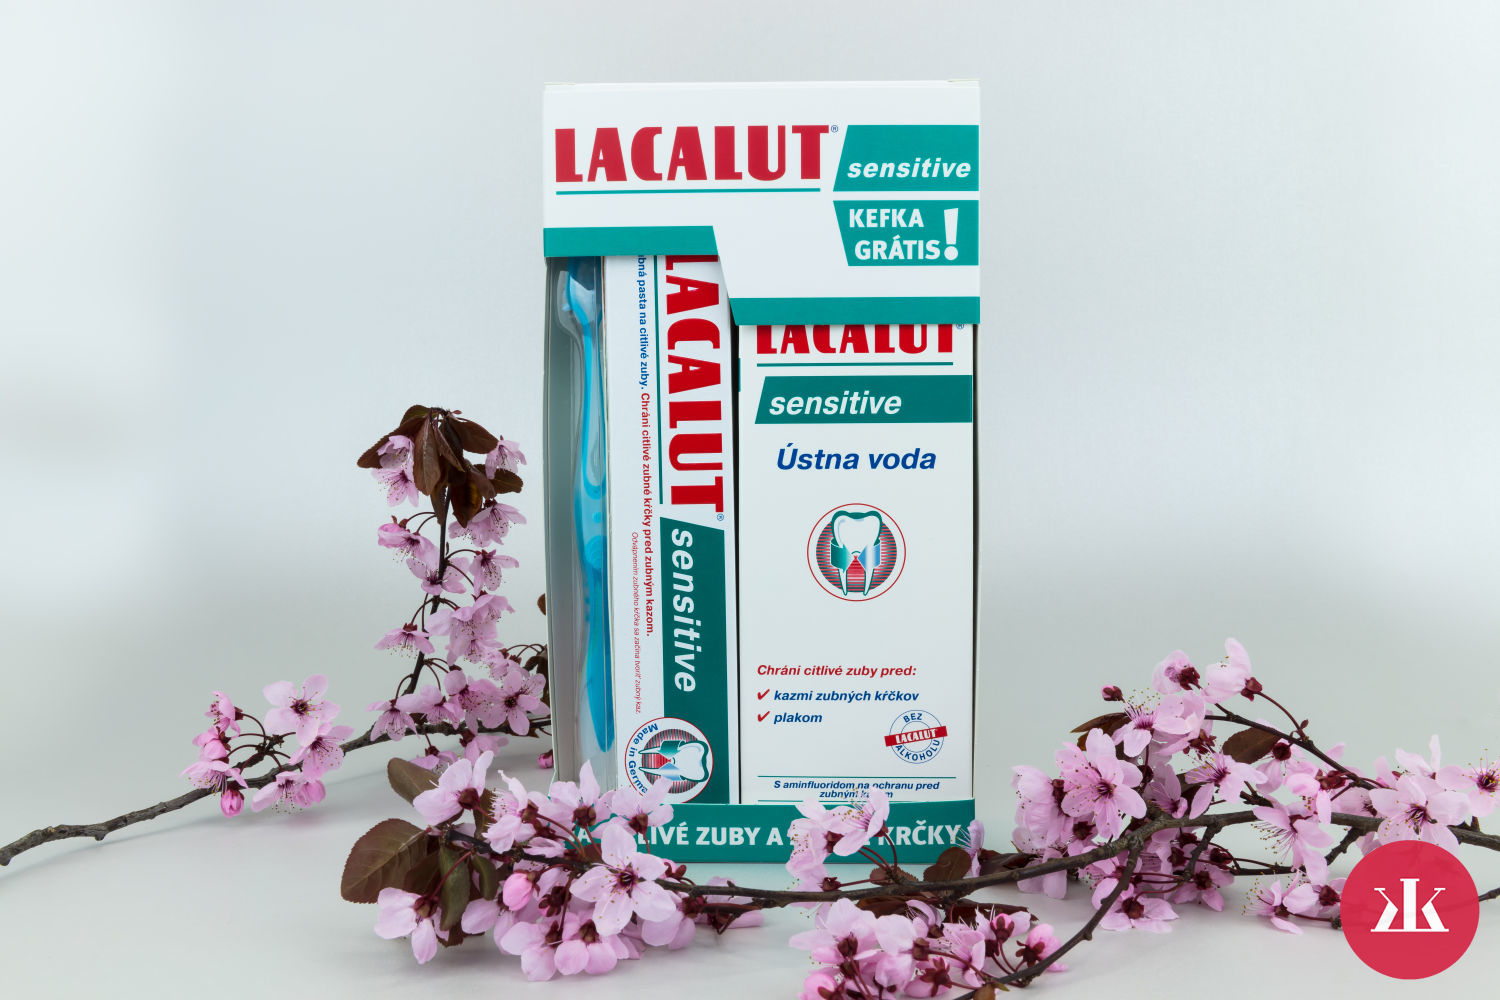 súťaž o Laclaut sensitive produkty